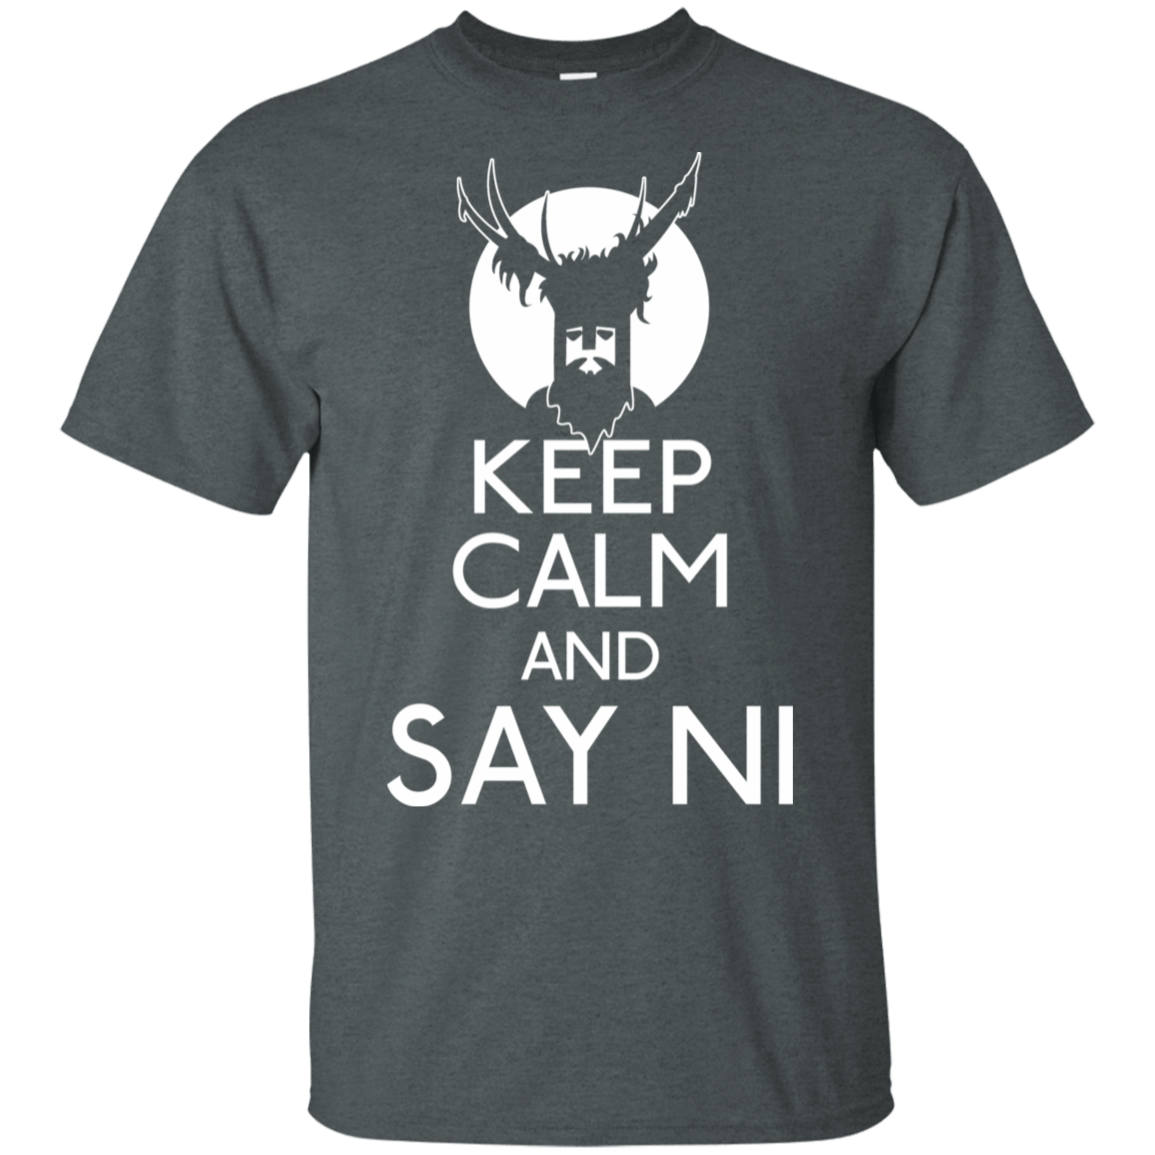 T-Shirts Dark Heather / S Keep Calm and Say Ni T-Shirt